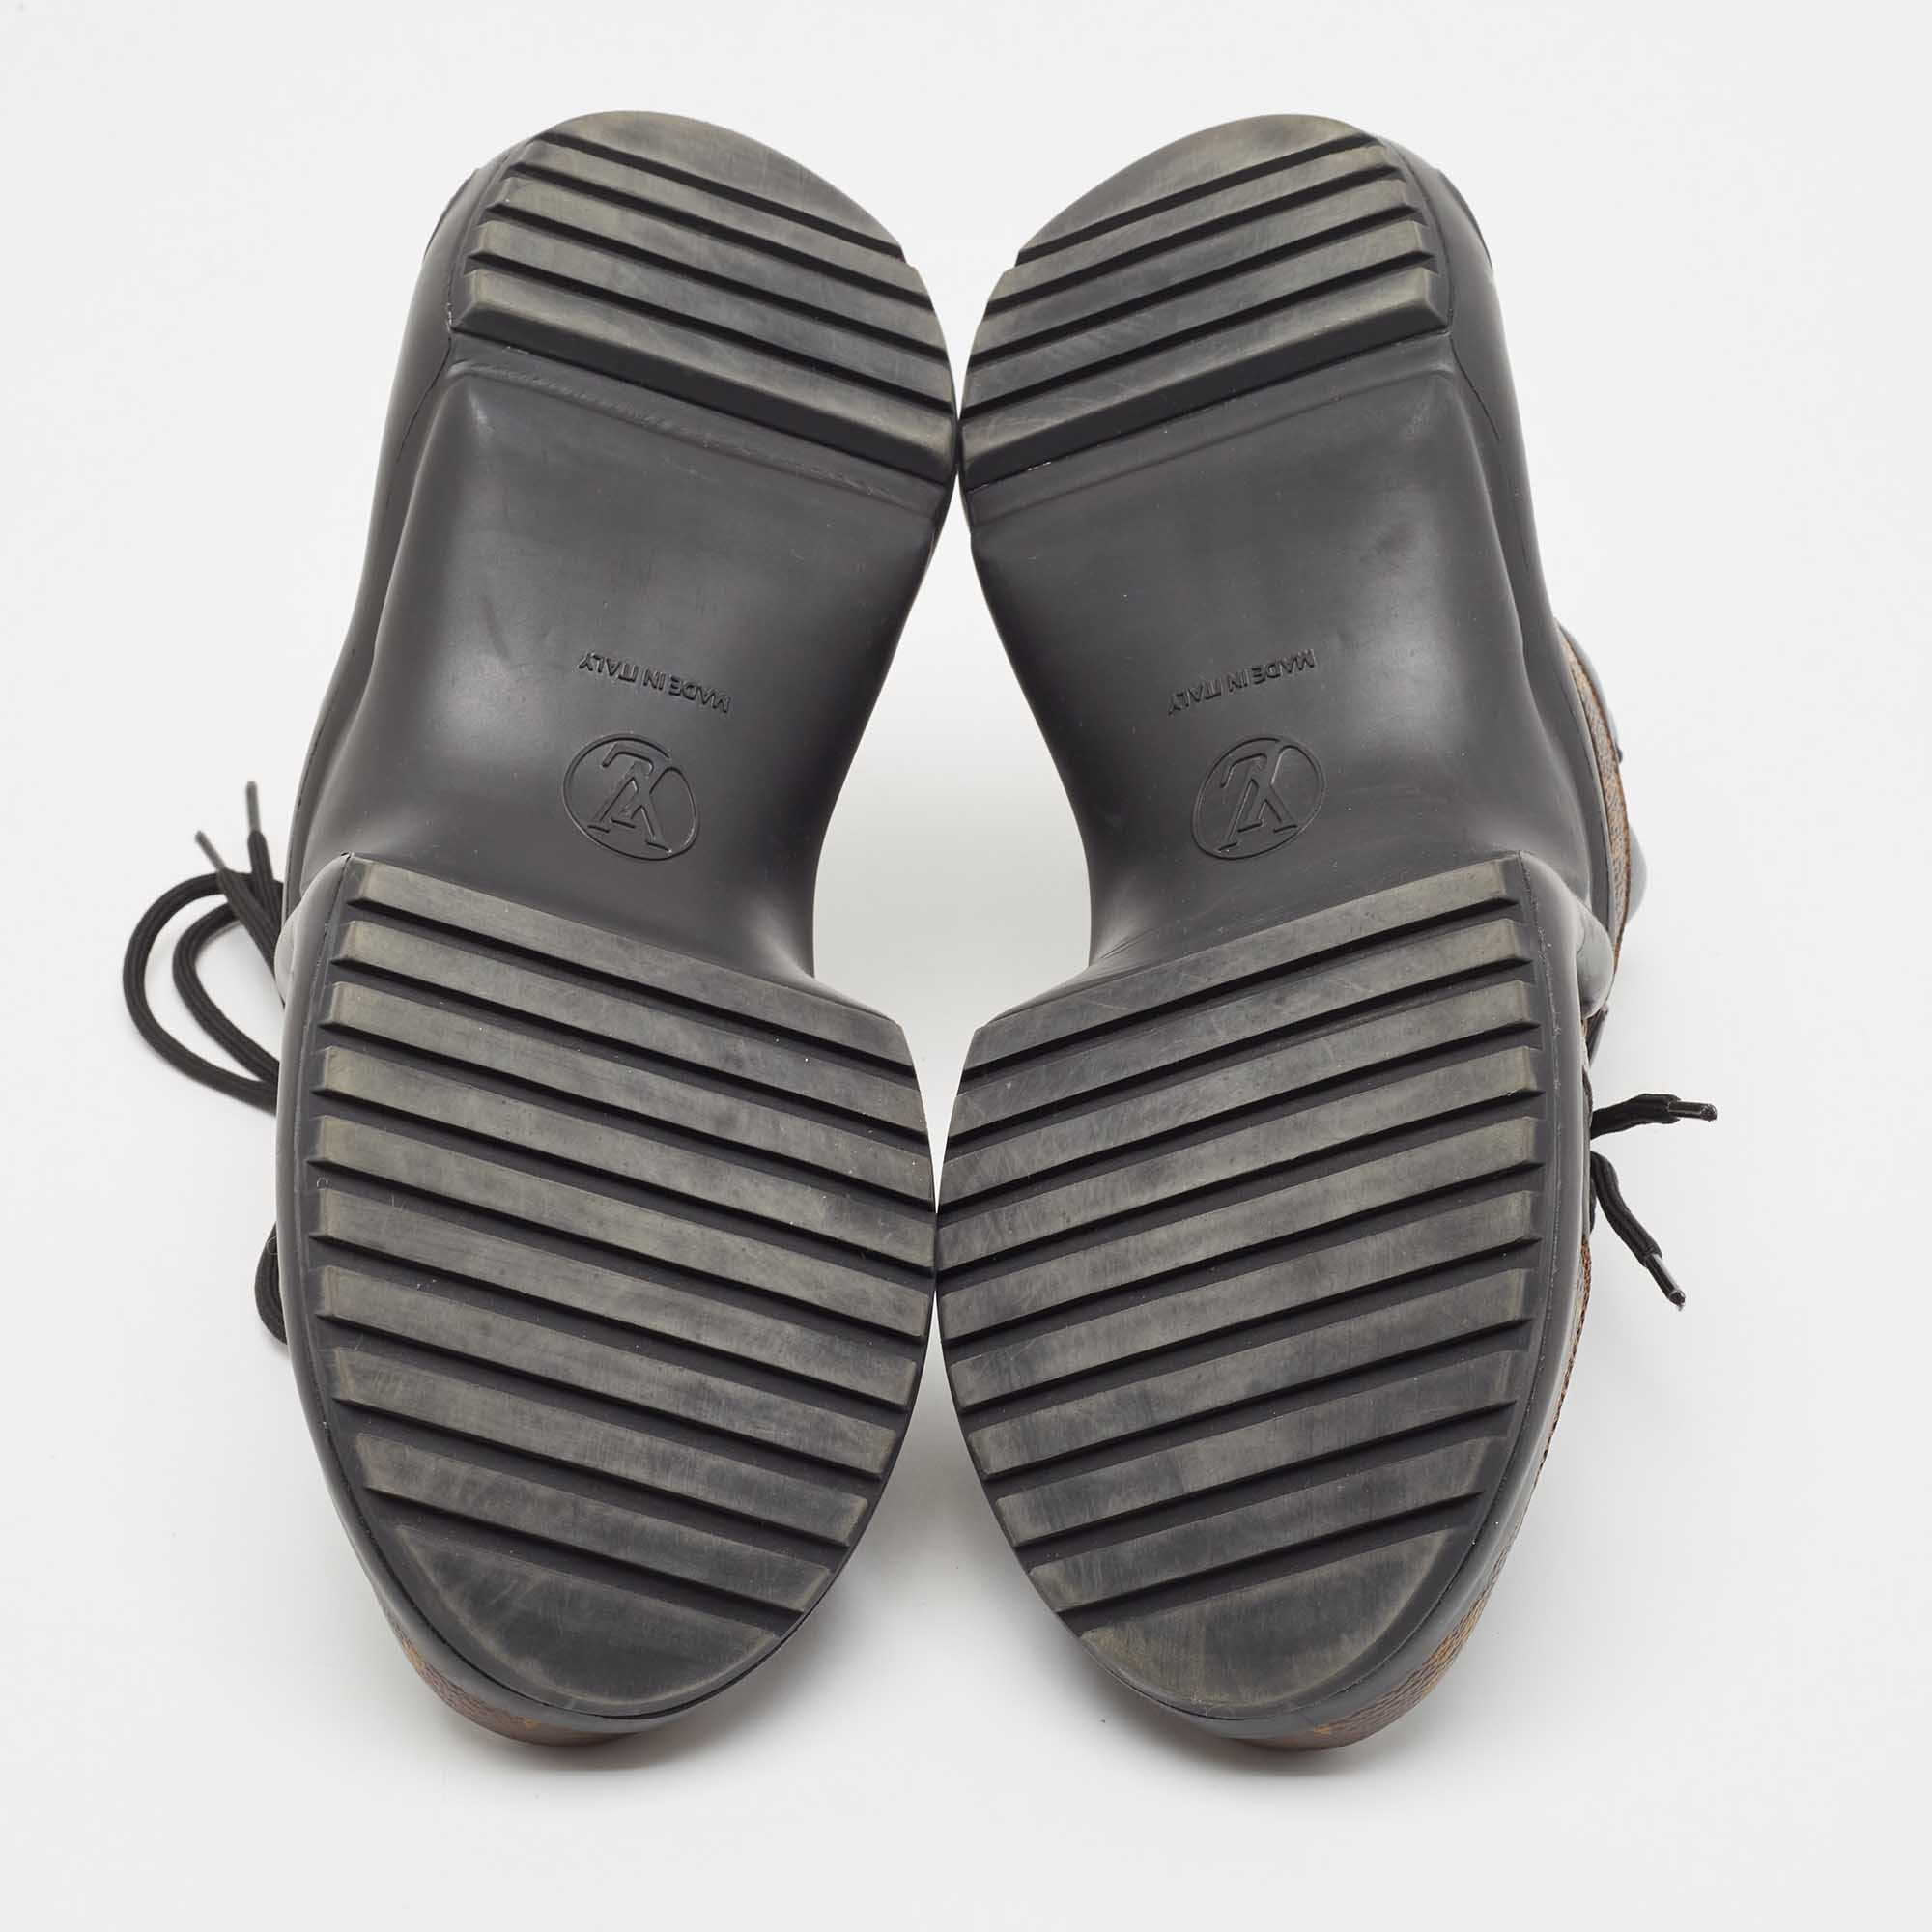 Louis Vuitton Black/Brown Nylon, Leather Archlight Sneakers Size 40